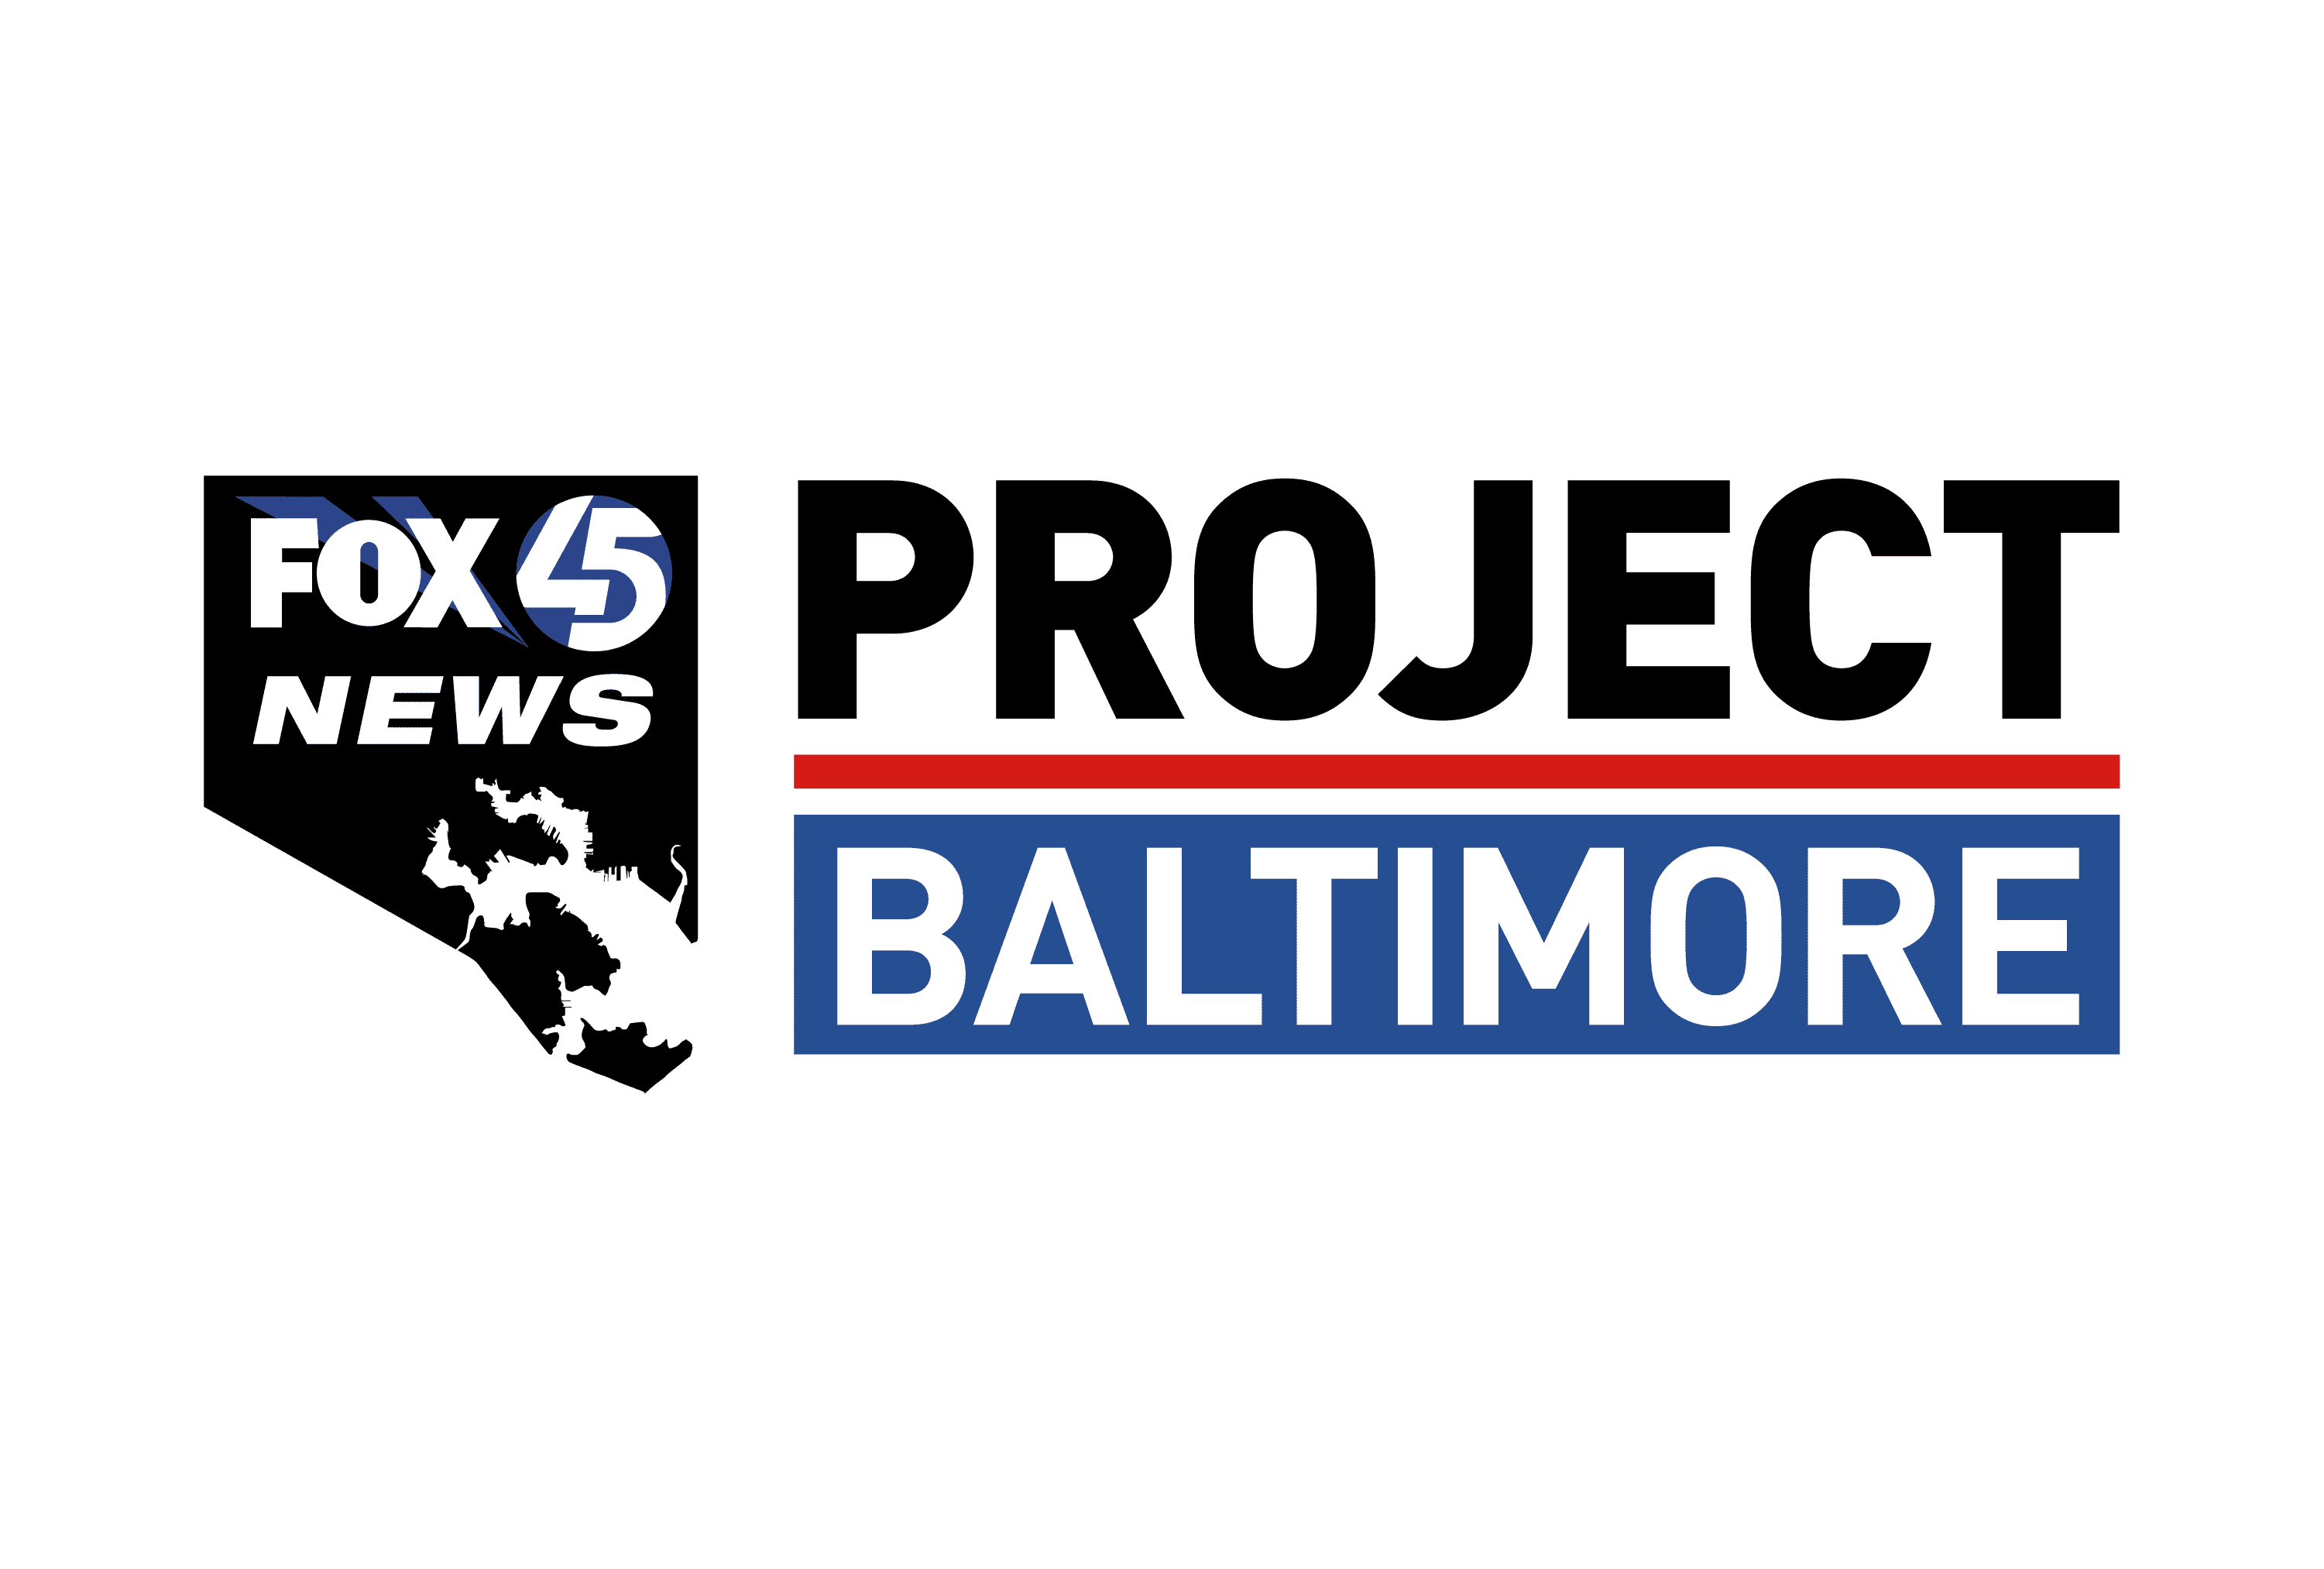 Fox 45 News Project Baltimore image